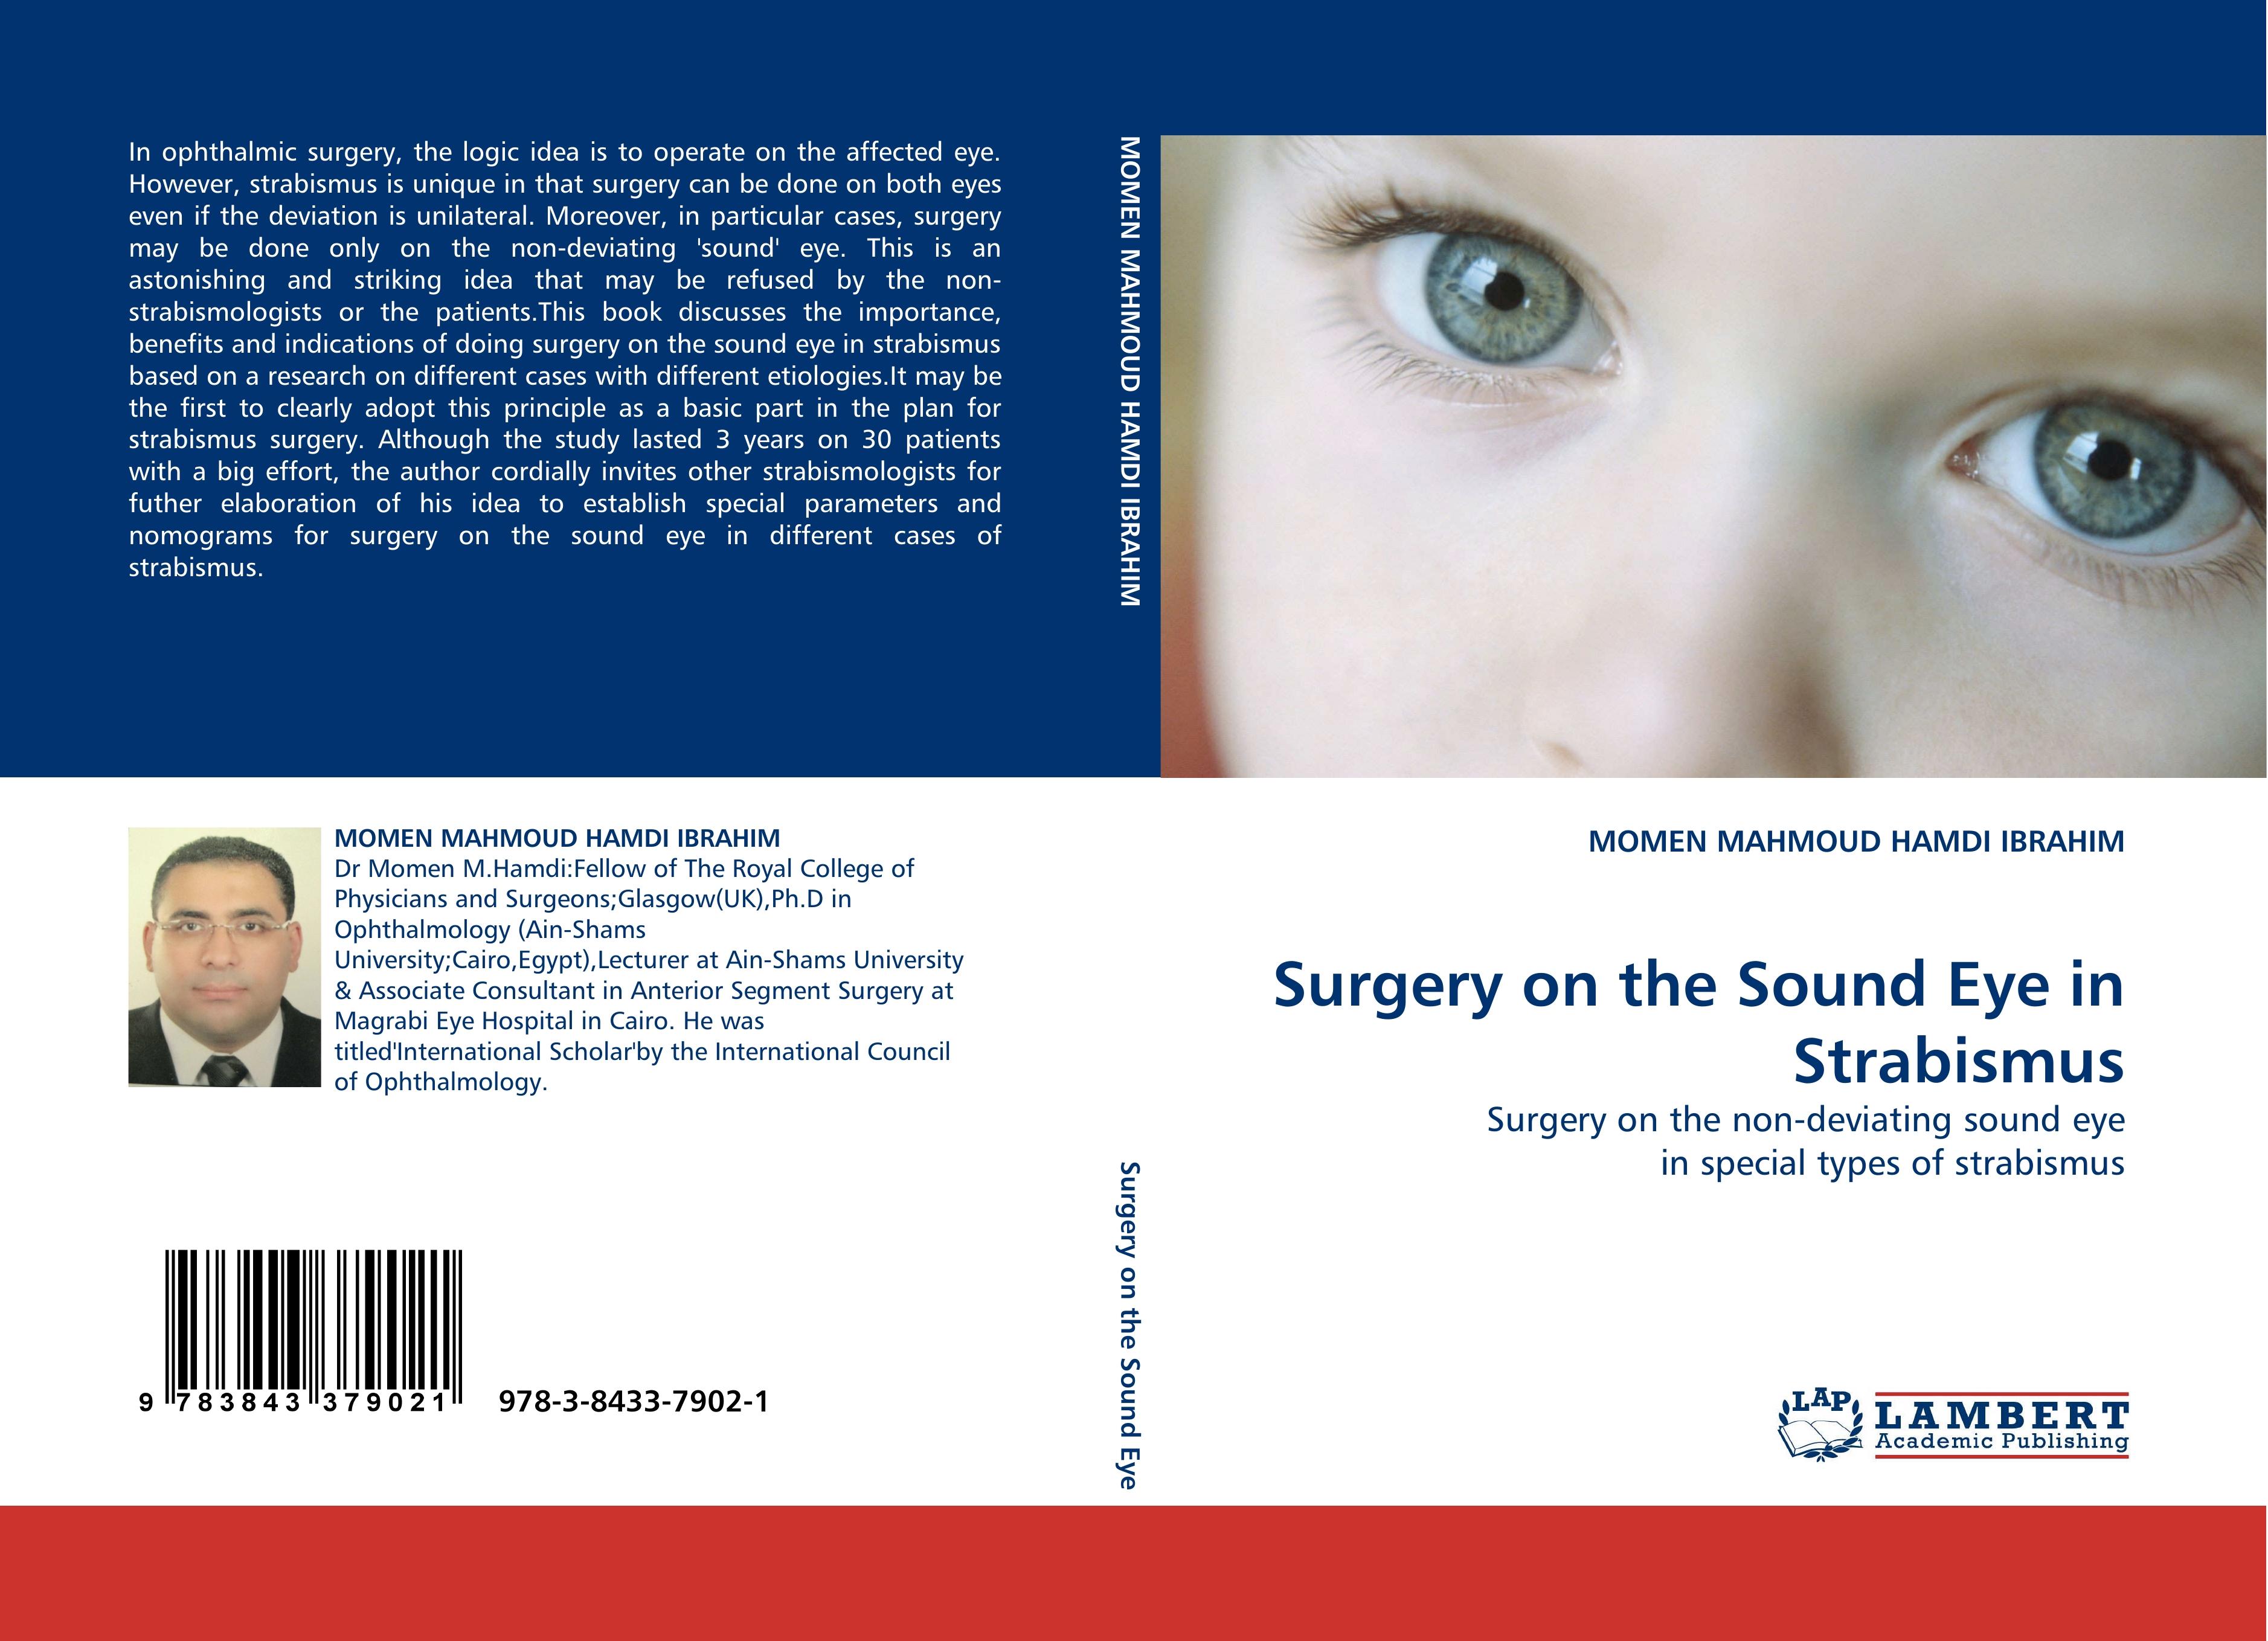 Surgery on the Sound Eye in Strabismus - MOMEN MAHMOUD HAMDI IBRAHIM